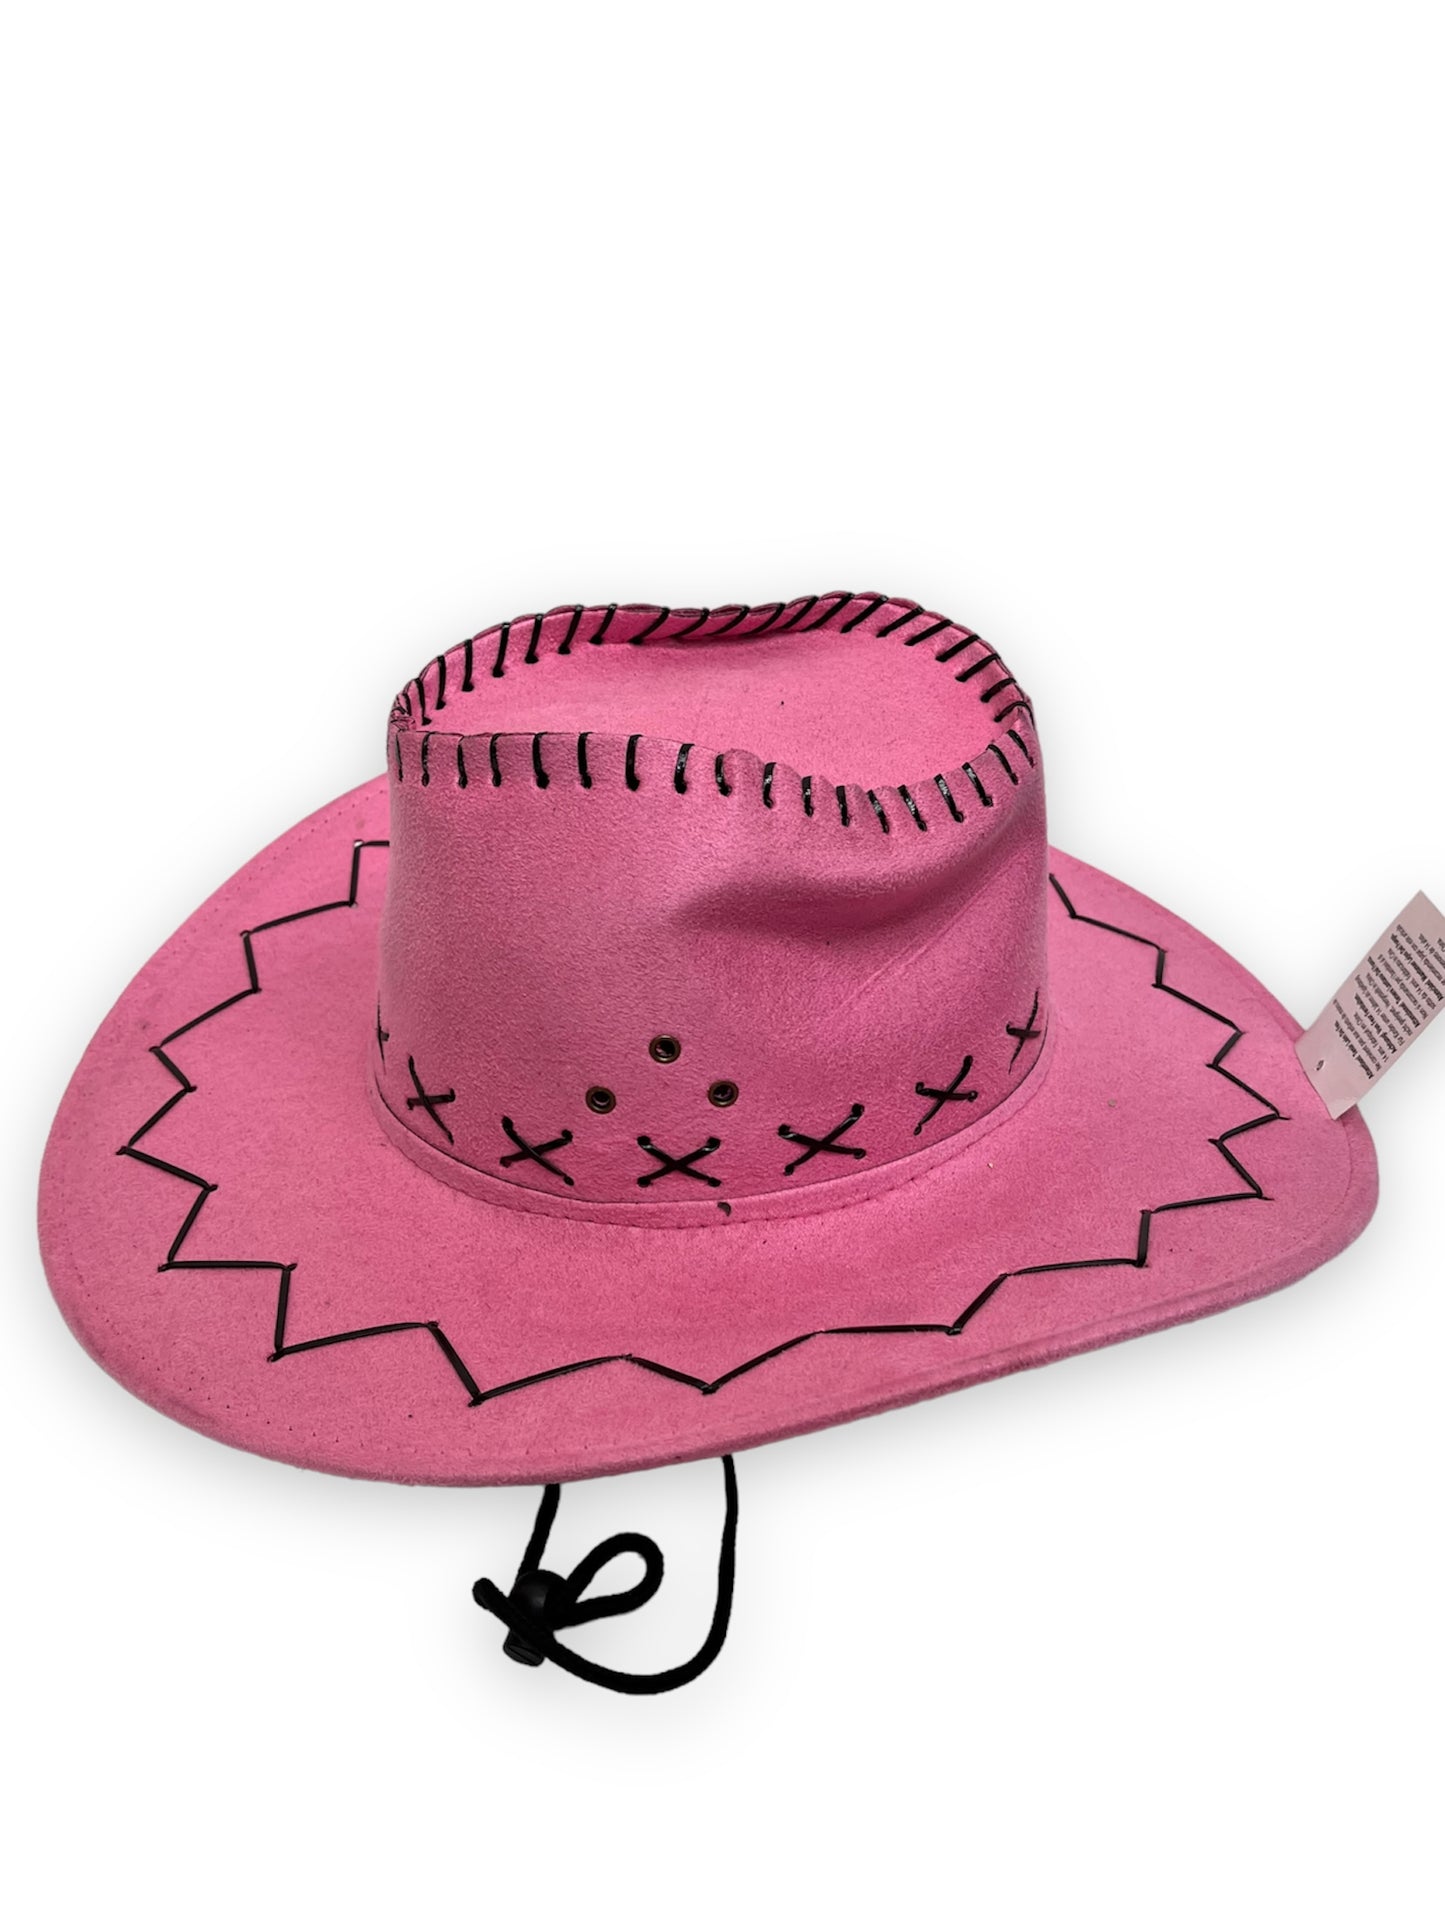 Faux suede Cowboy hat Pink - New